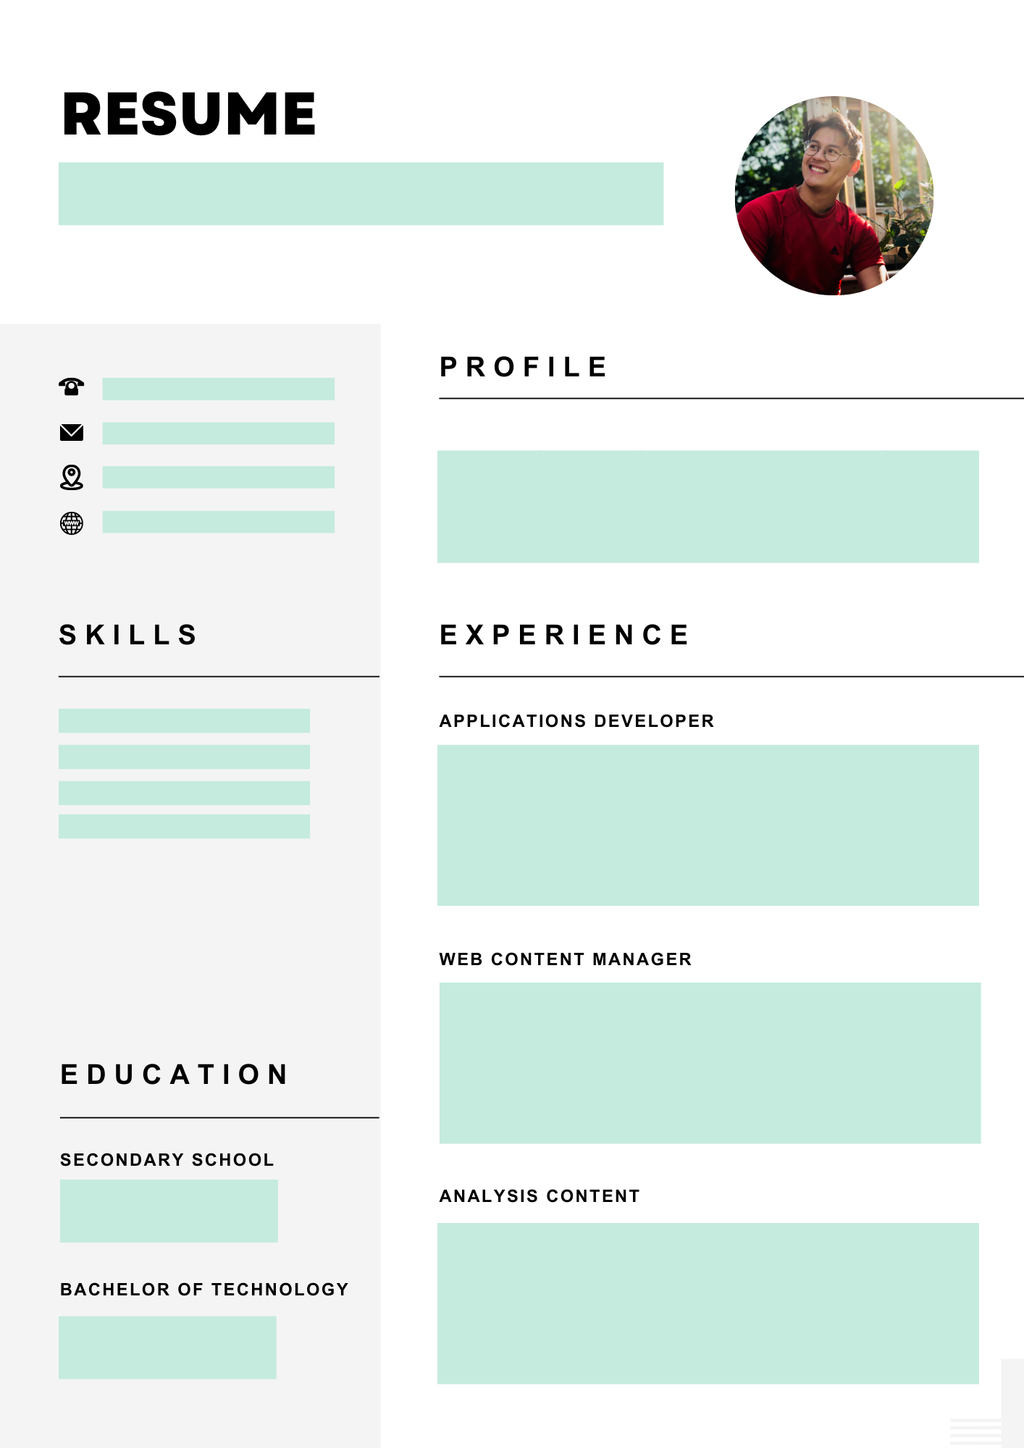 a visual representing a standard resume